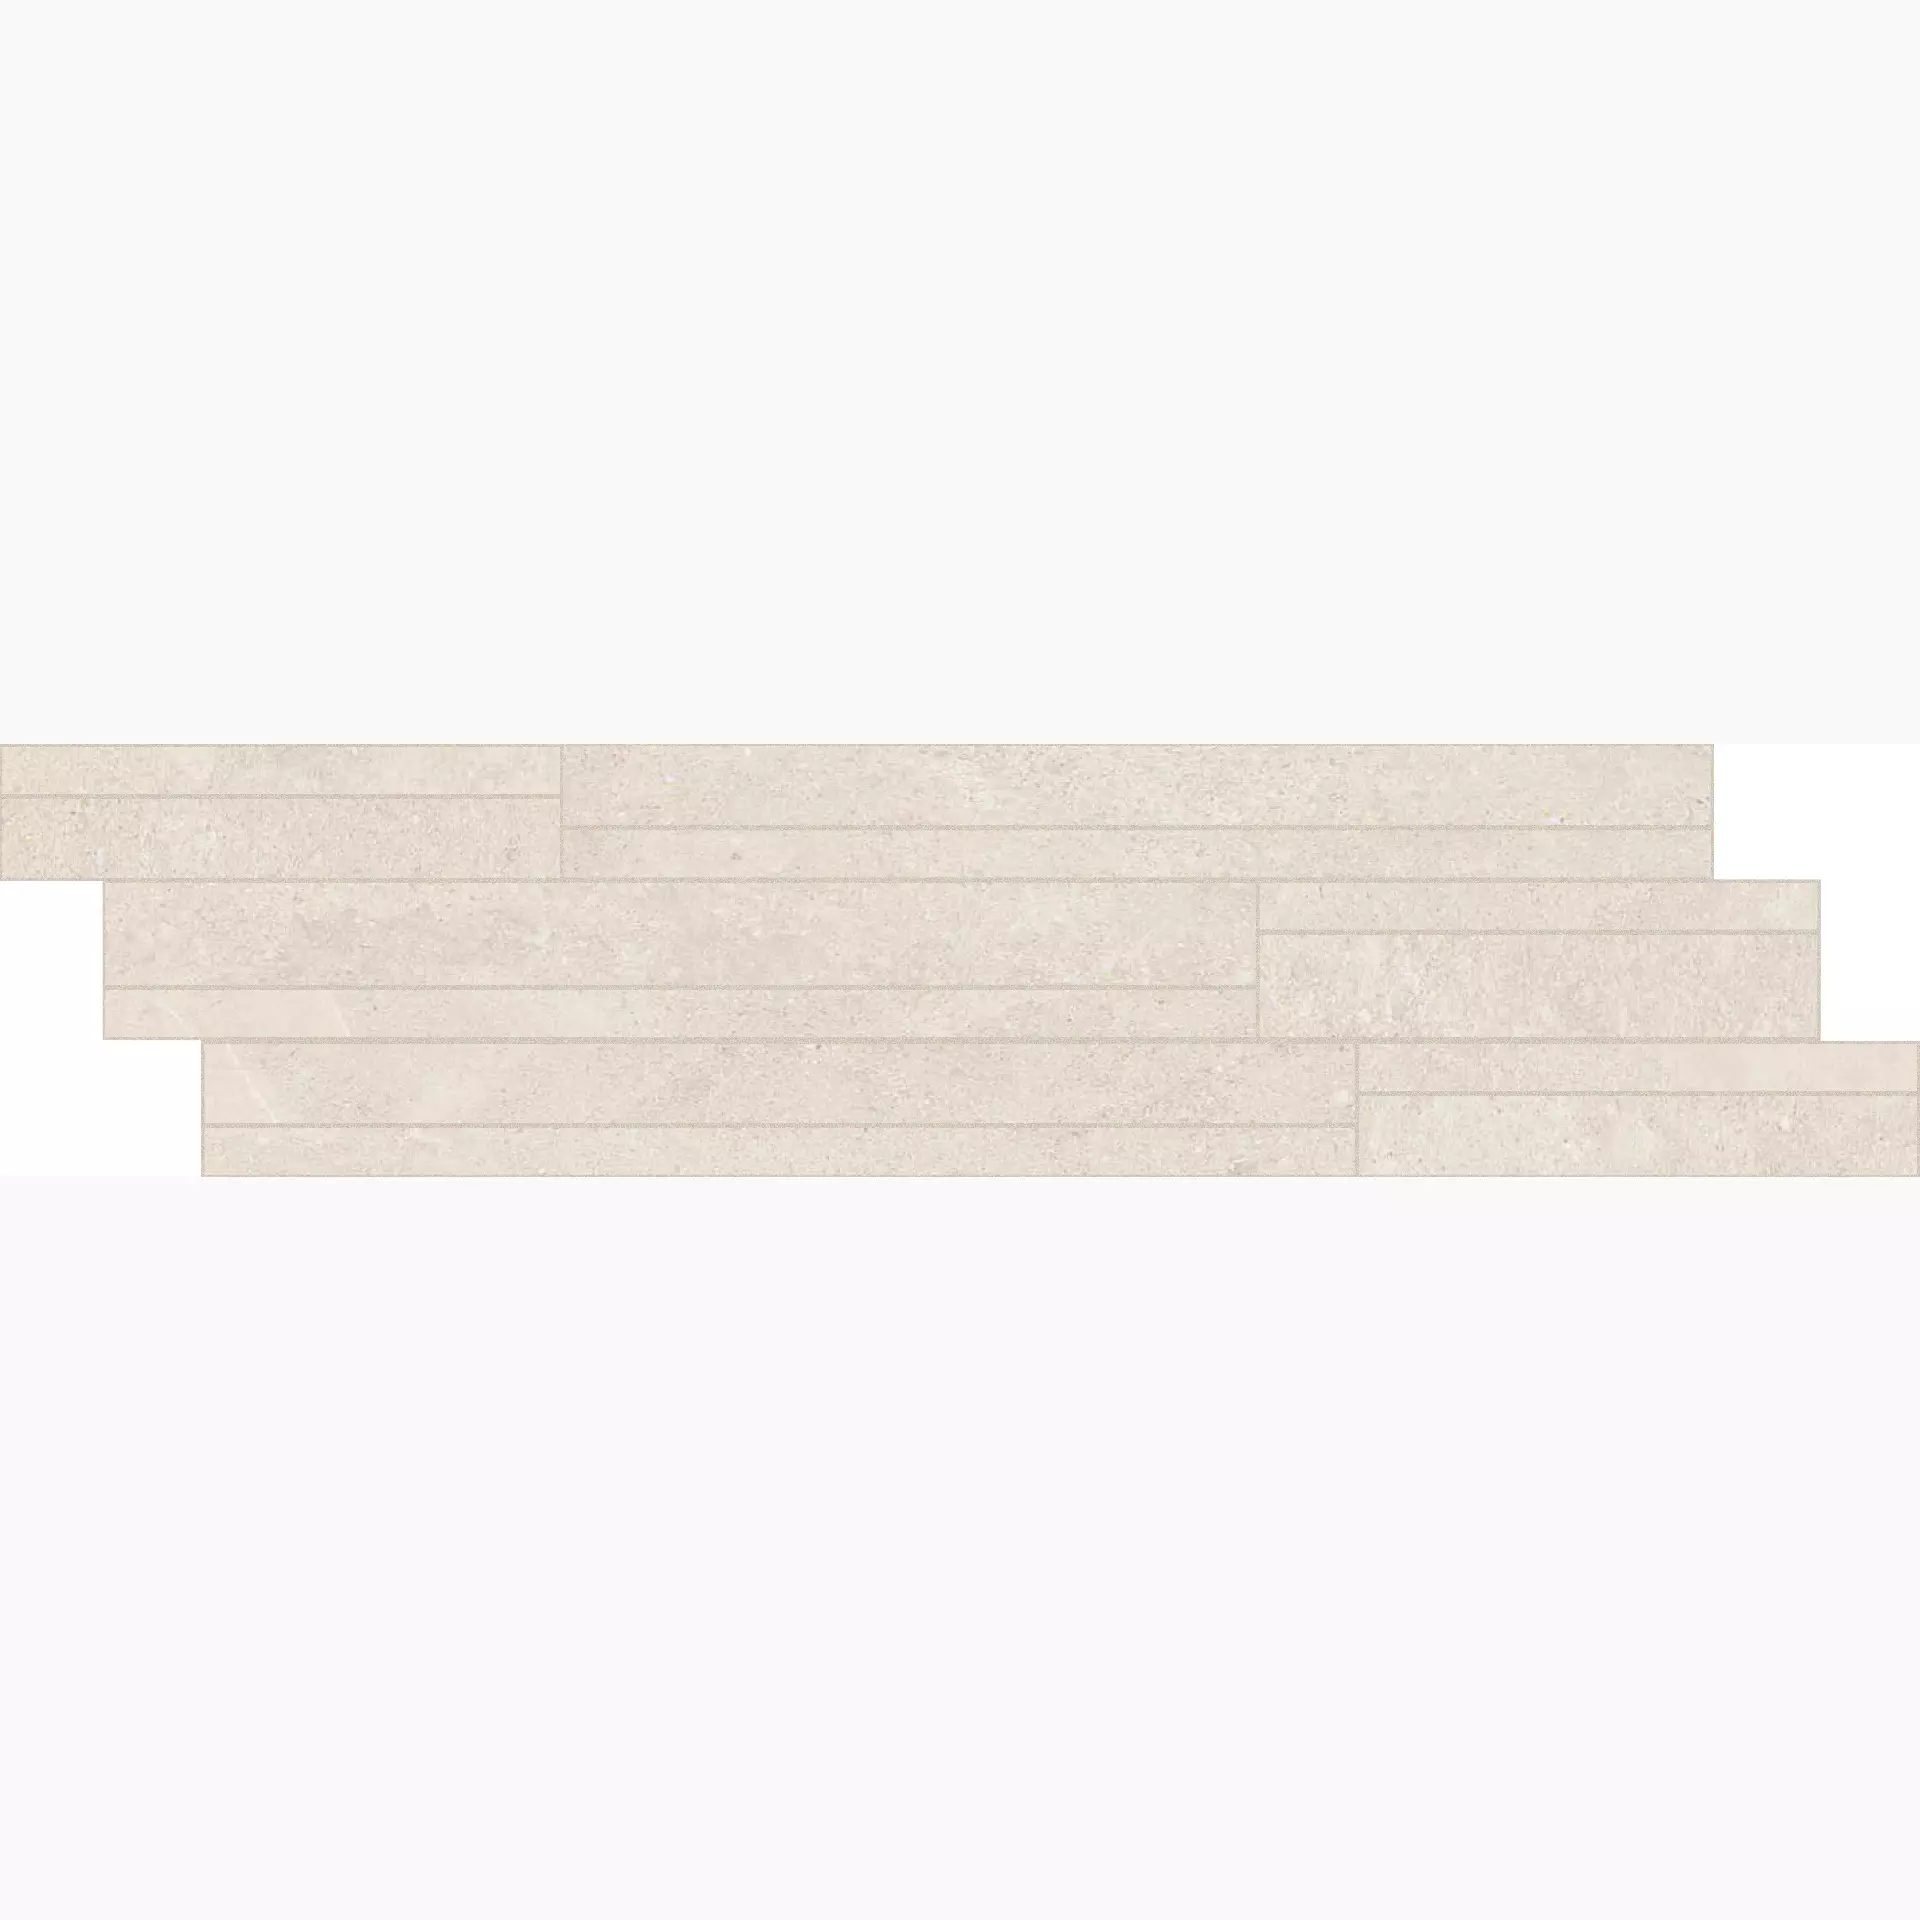 Florim Elemental Stone Of Cerim White Limestone Naturale – Lucido White Limestone 767025 glaenzend natur 15x60cm Modul Bordüre Sfalsato Mix rektifiziert 9mm